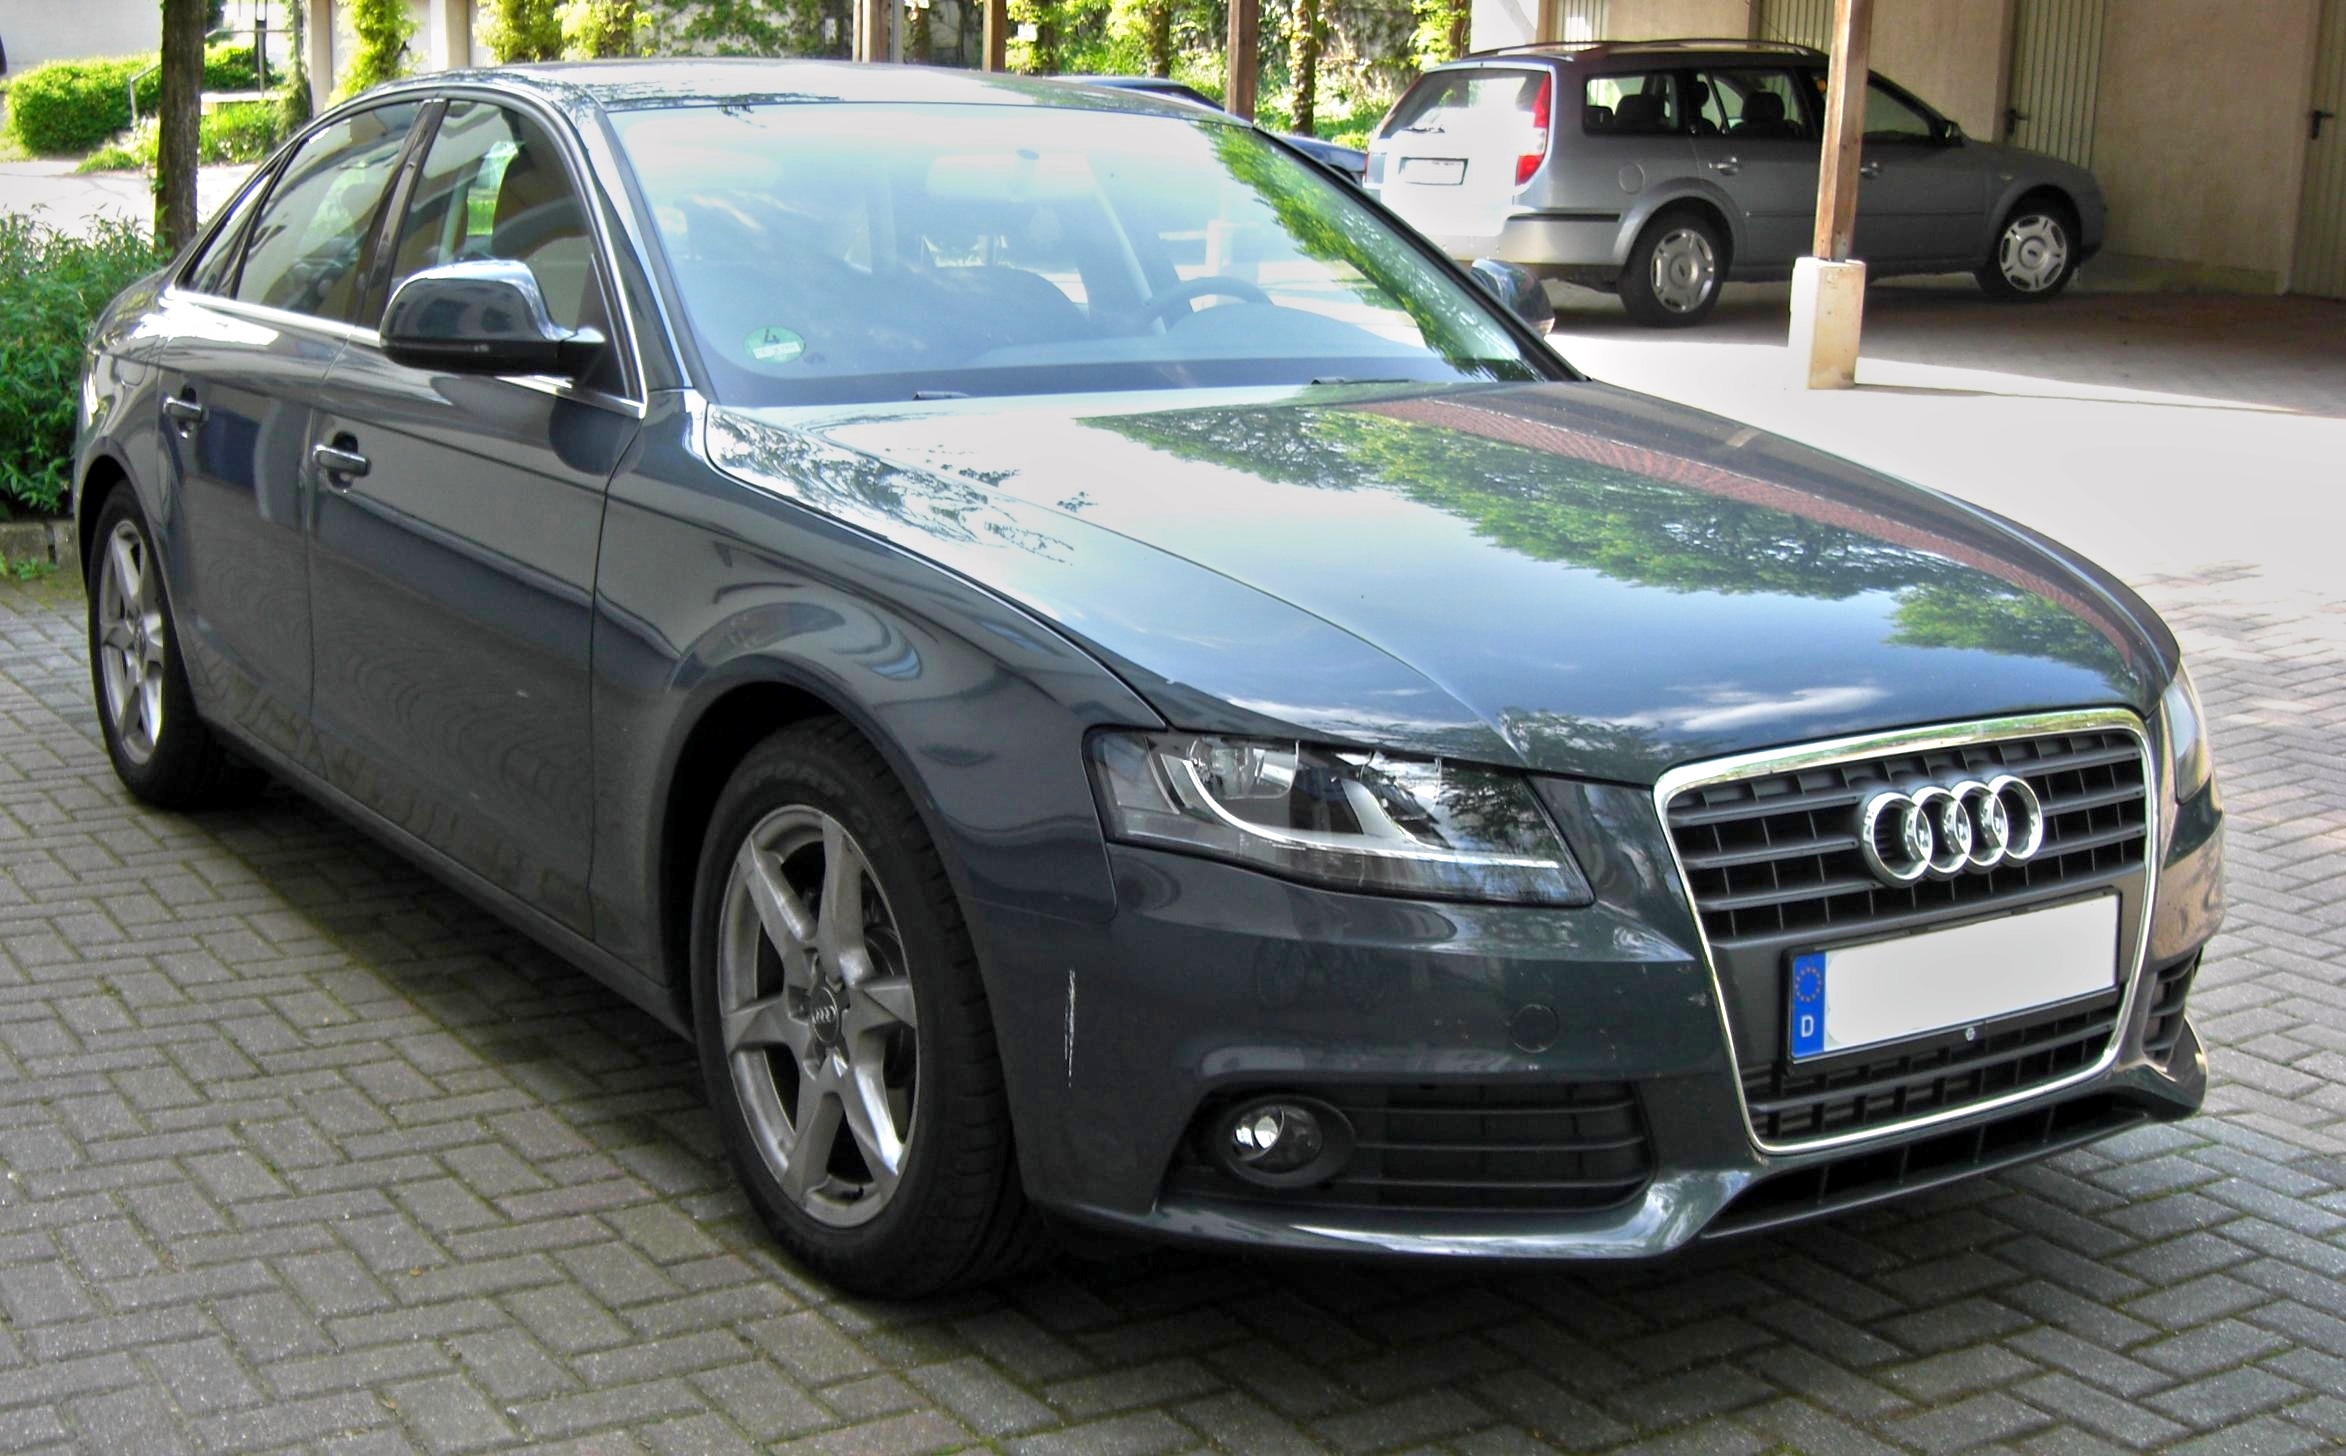 File:Audi A4 B8 front 20091209.jpg - Wikimedia Commons